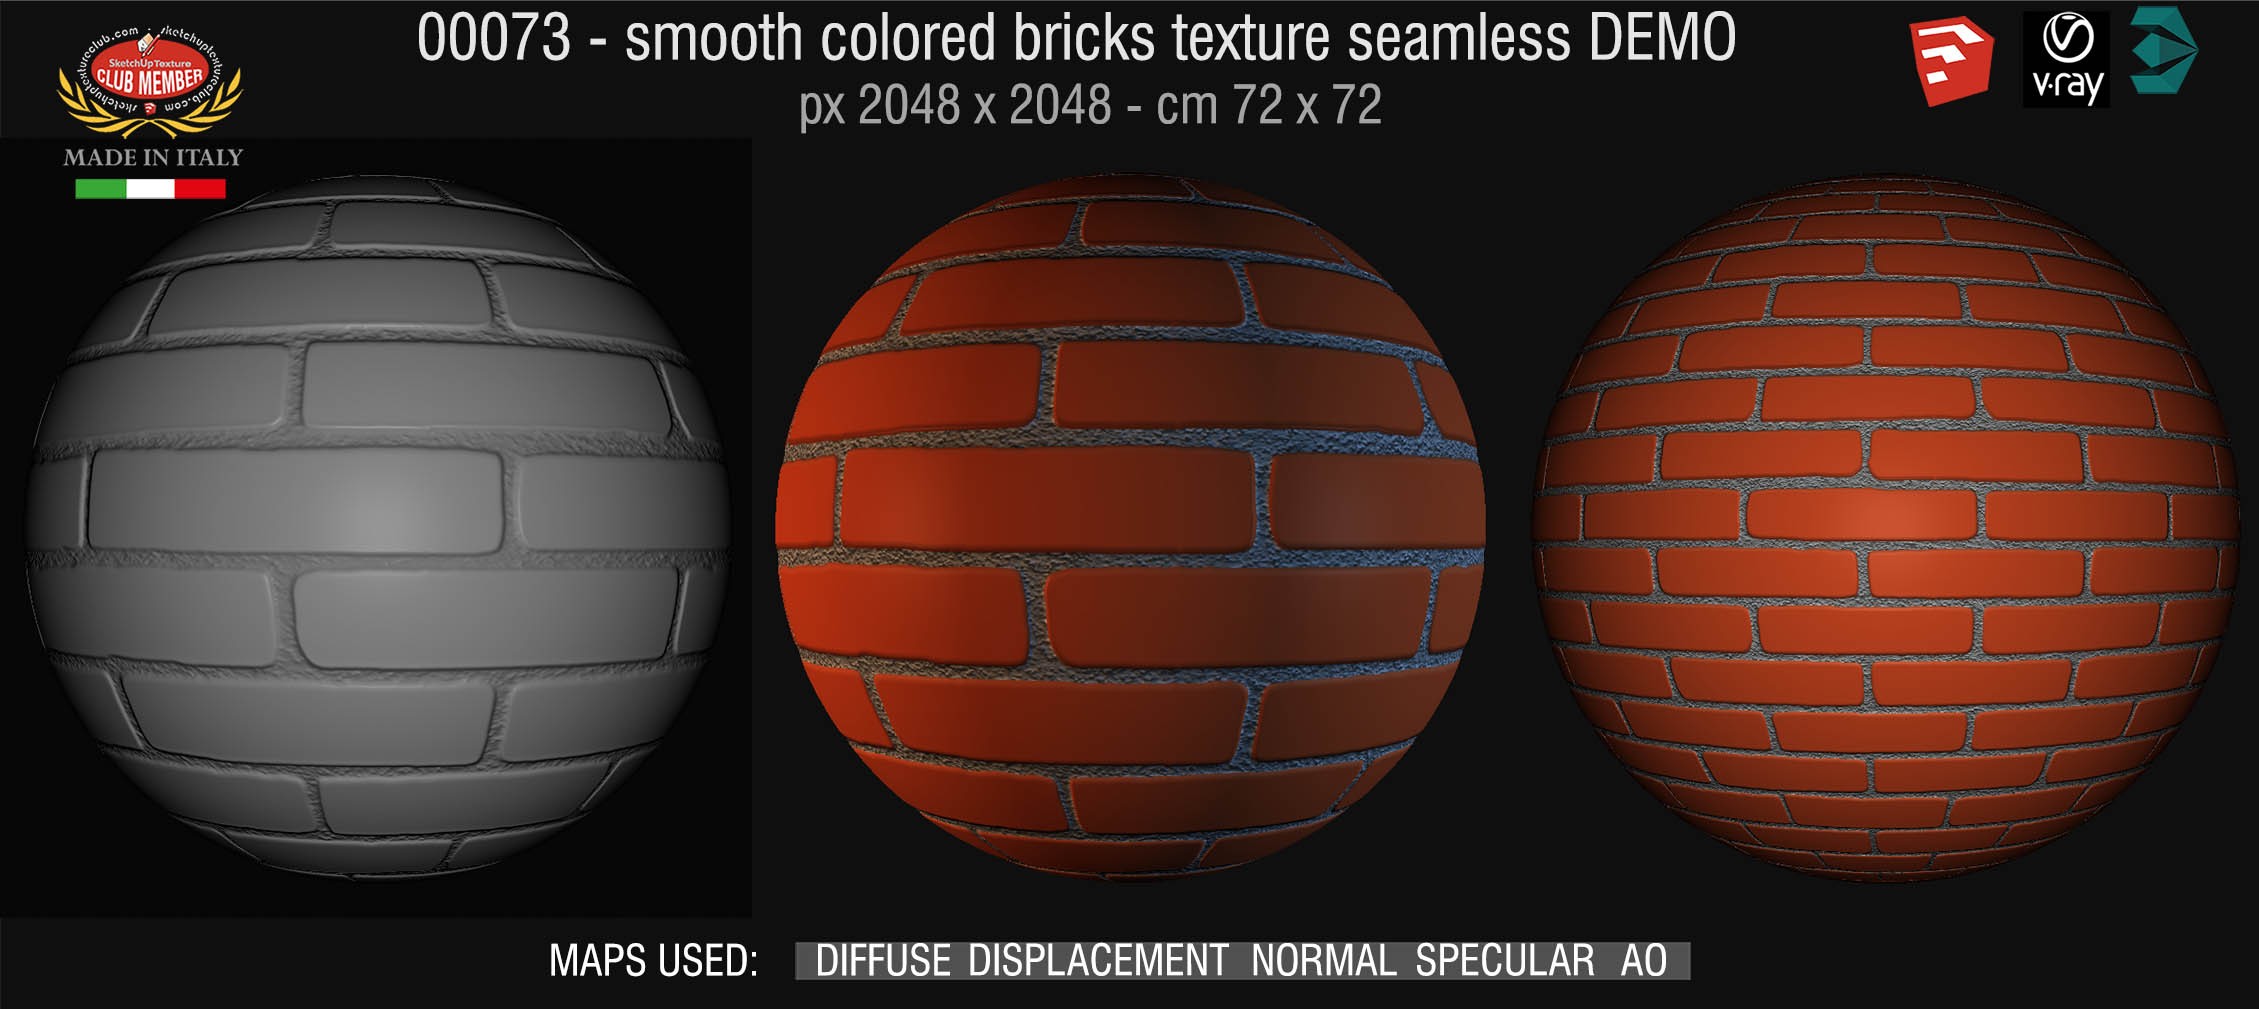 00073 smooth colored bricks texture seamless + maps DEMO